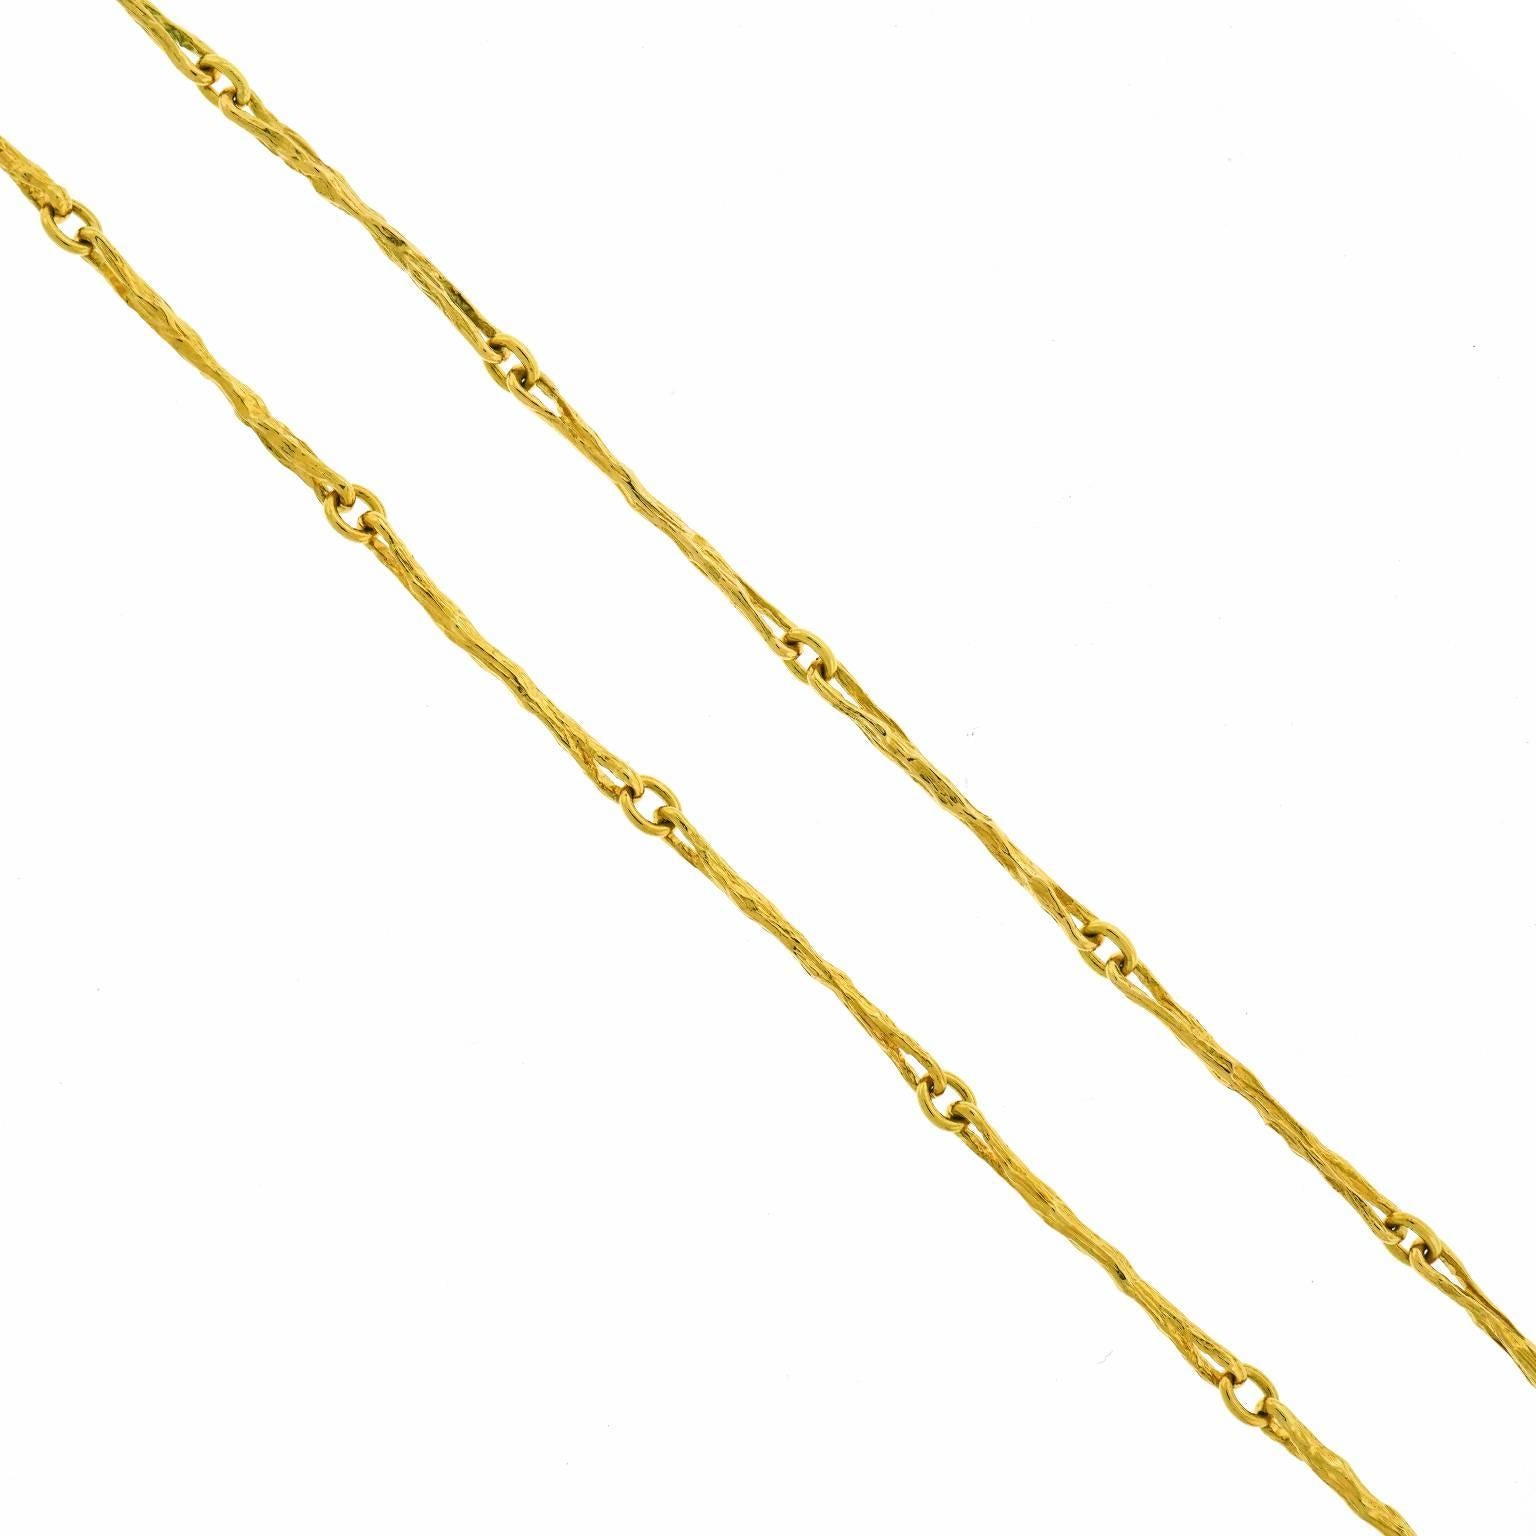 Gilbert Albert Gold Necklace and Bracelet 4